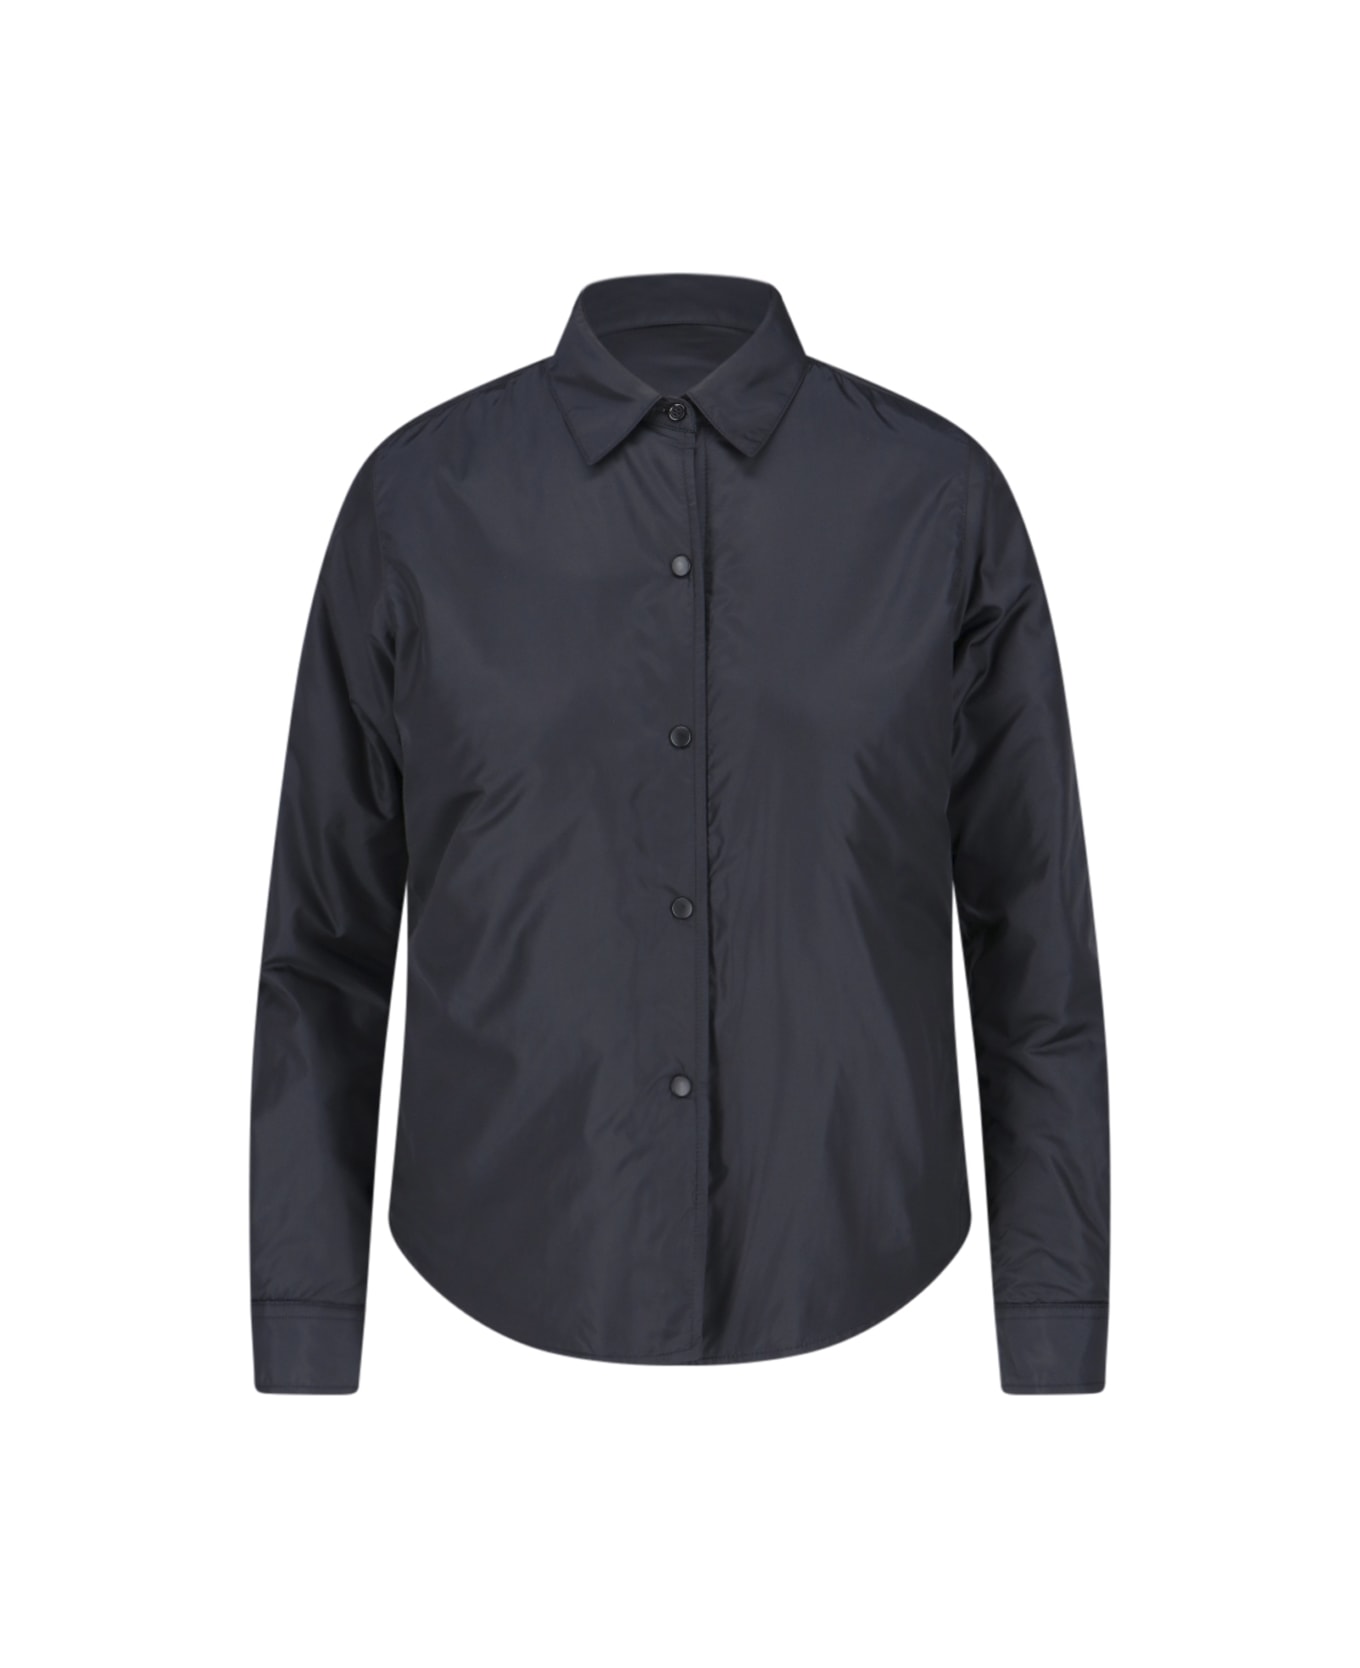 Aspesi Black Glue Shirt Jacket - Black